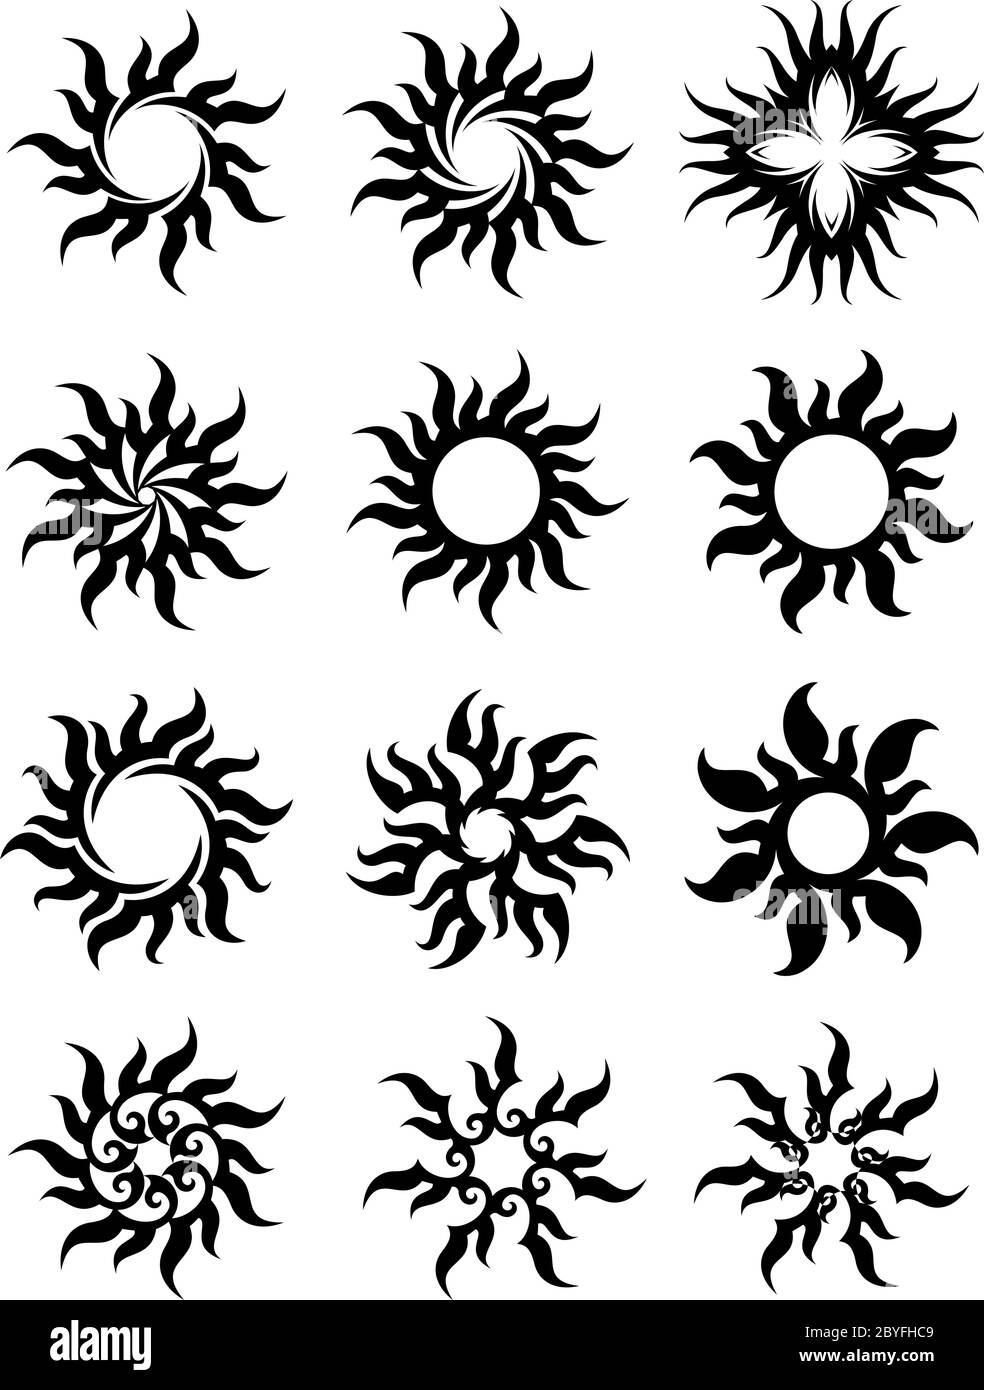 Sun tattoo images